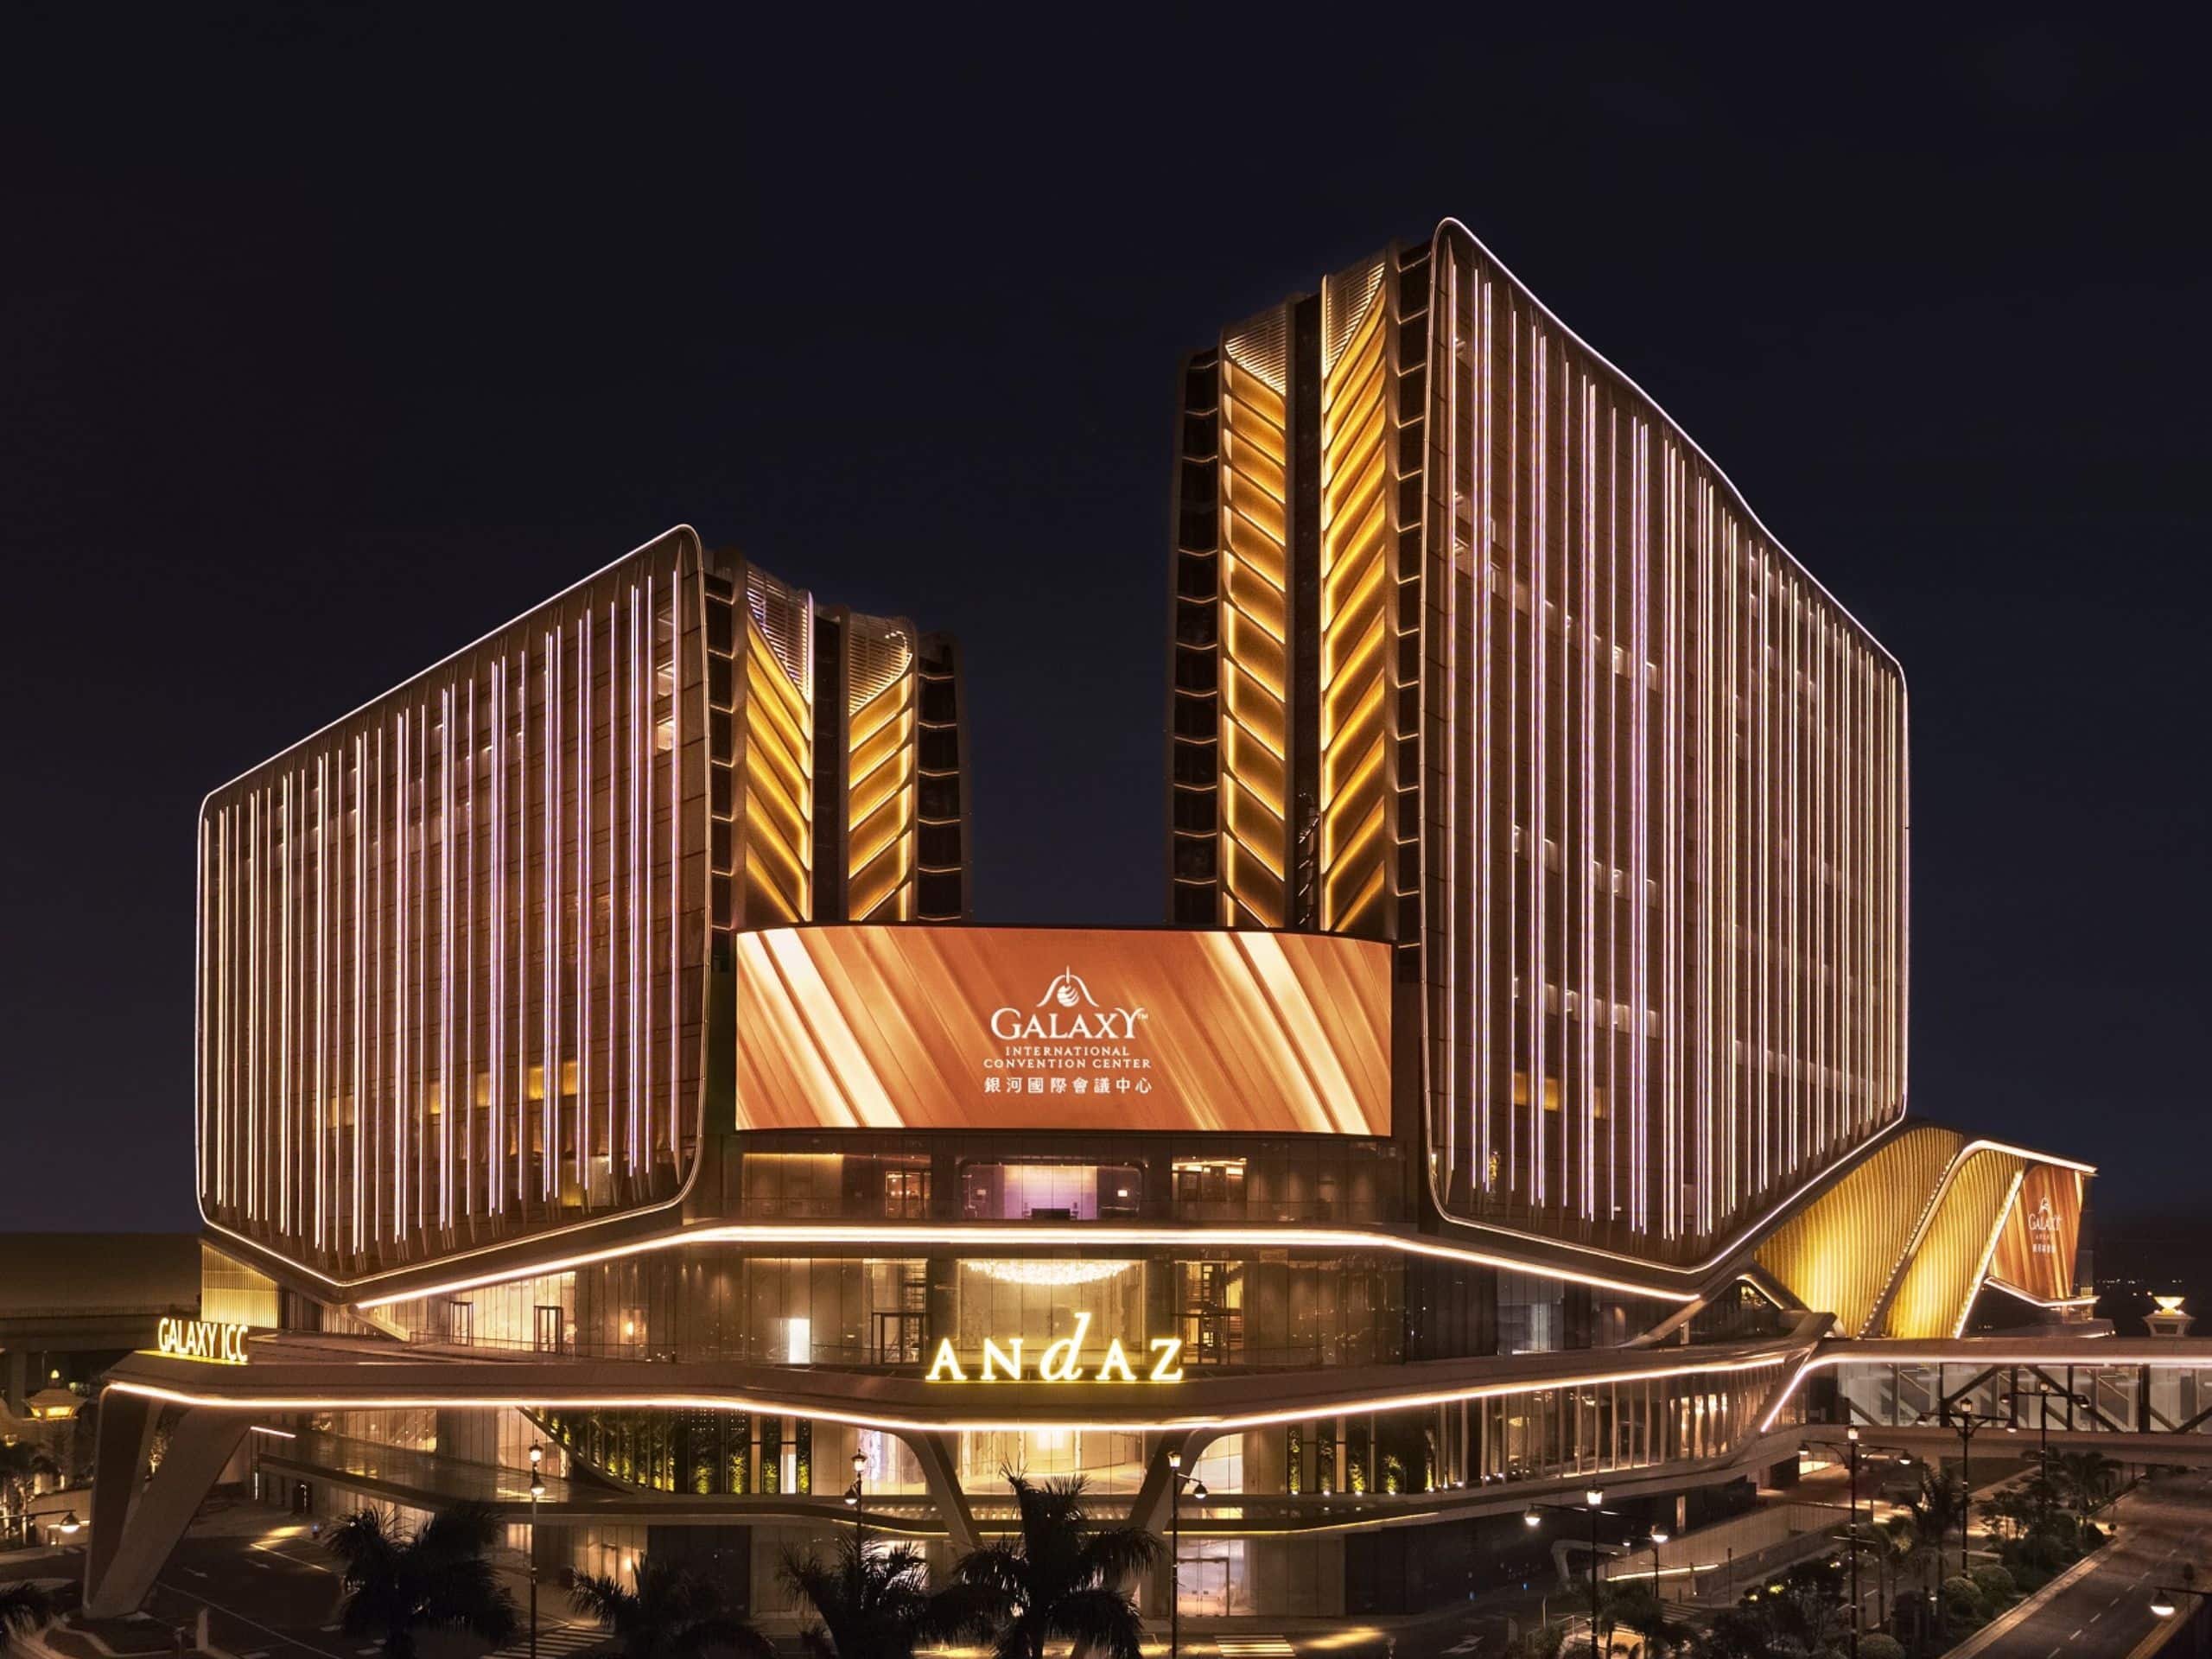 Andaz Macau Galaxy International Convention Center Night View